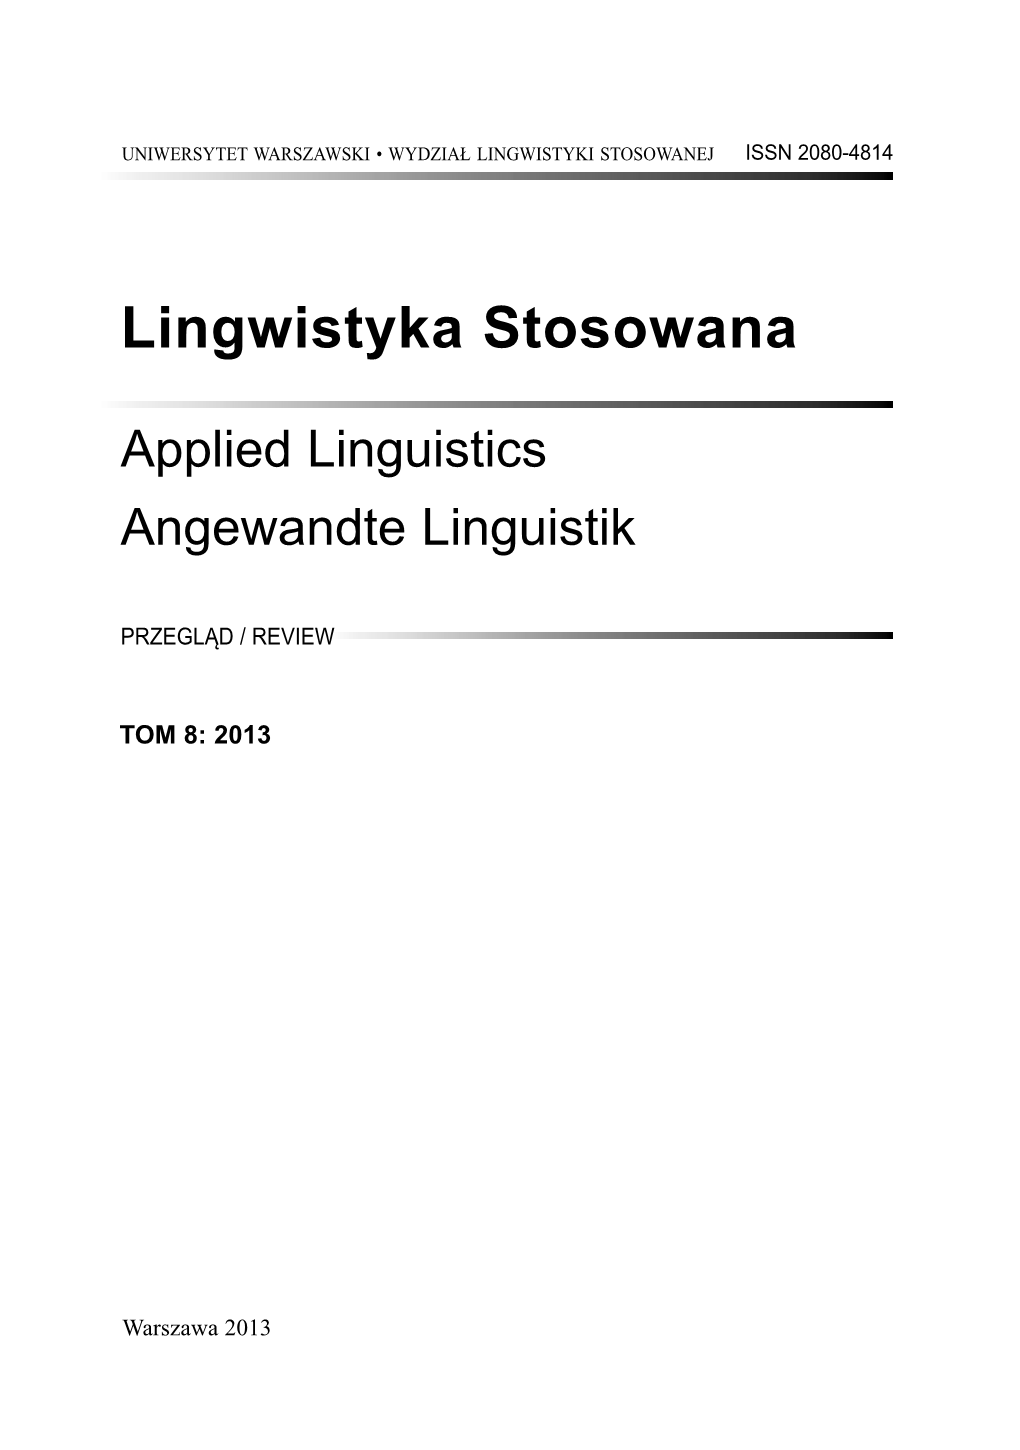 Lingwistyka Stosowana 8, 2013.Indd